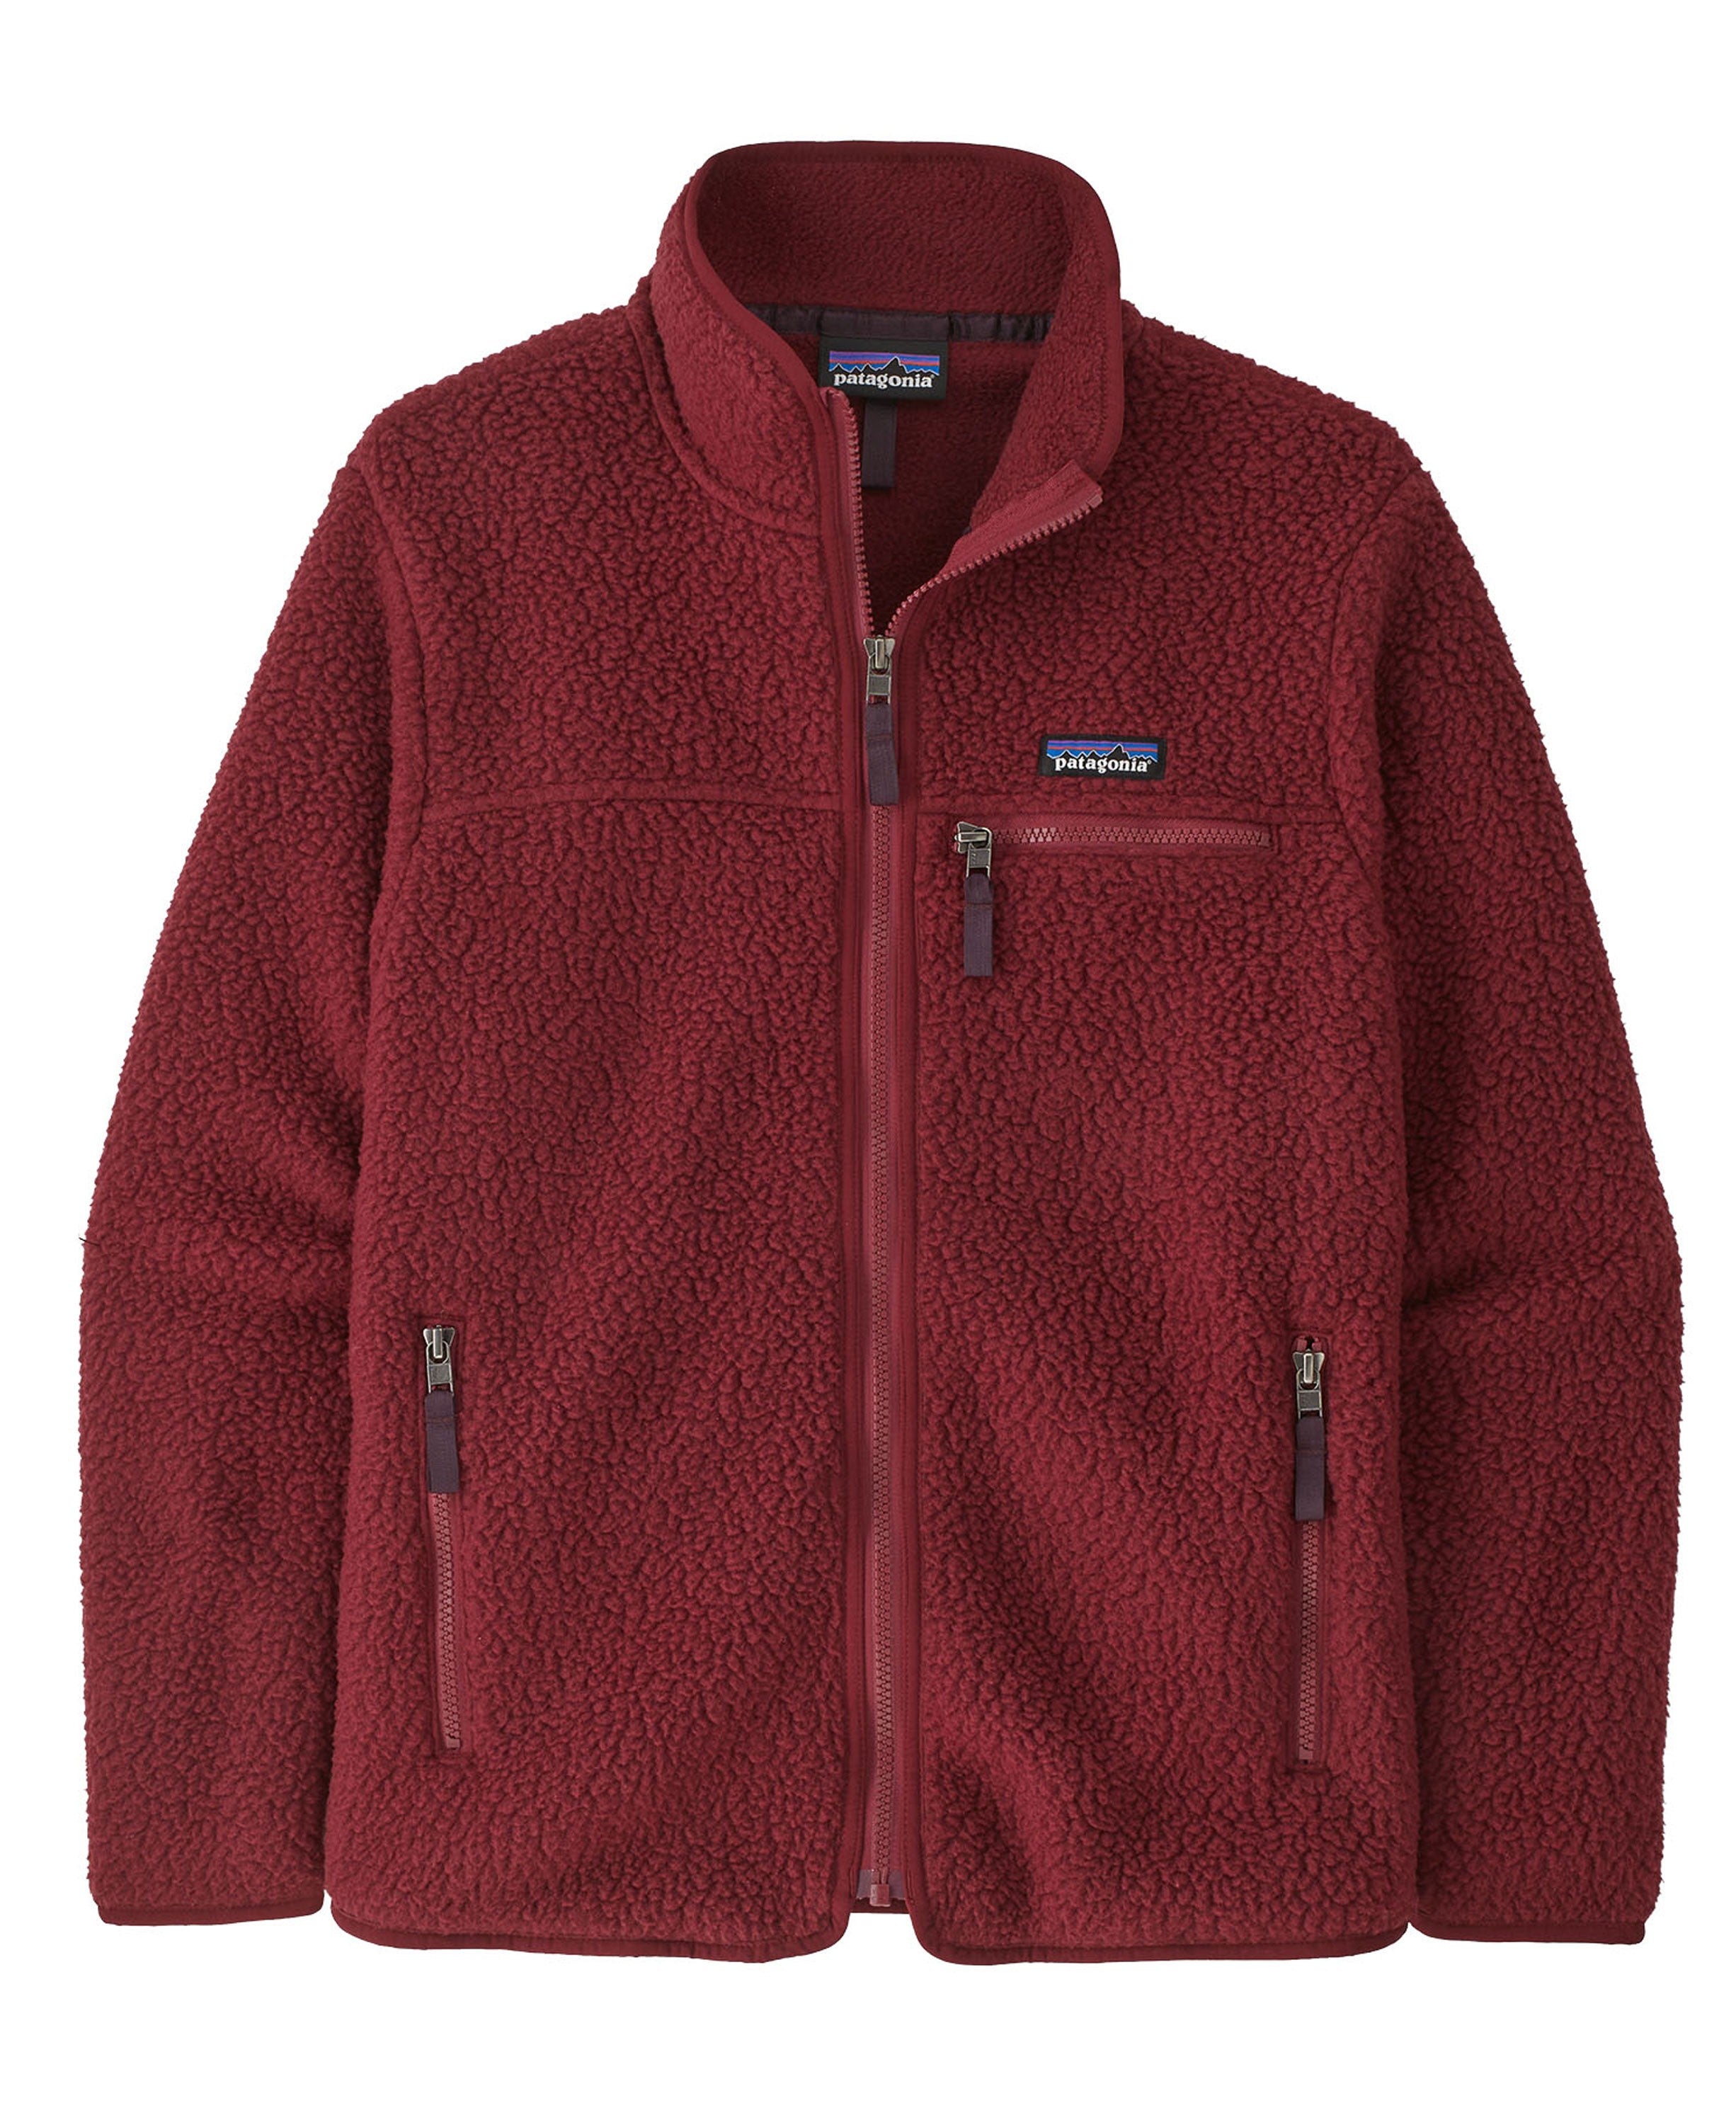 Retro Pile Fleece Jacket - Carmine Red